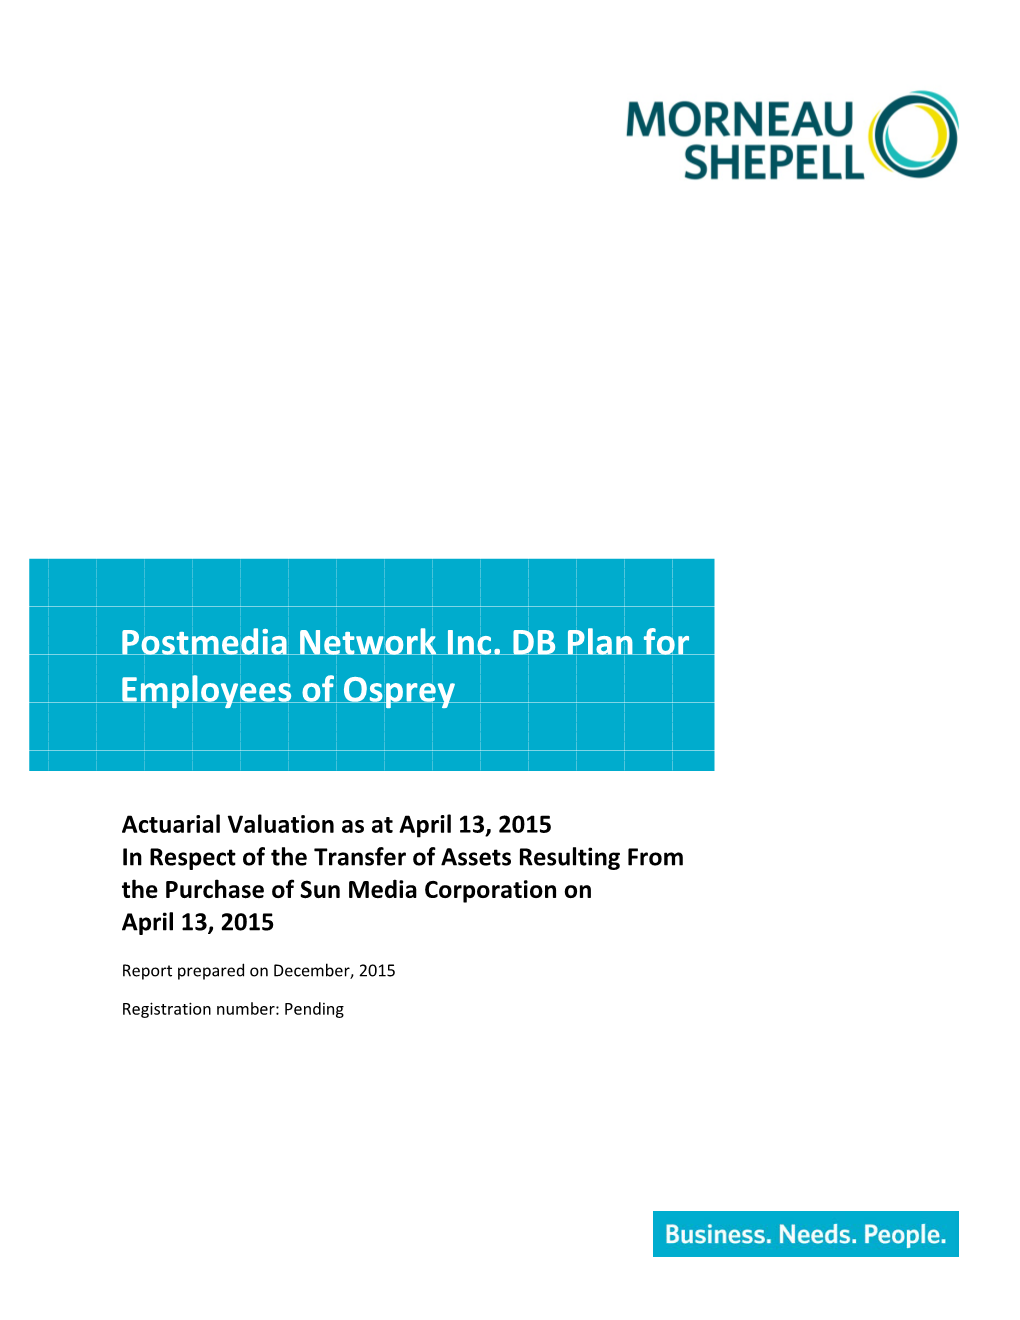 Postmedia Network Inc. DB Plan for Employees of Osprey